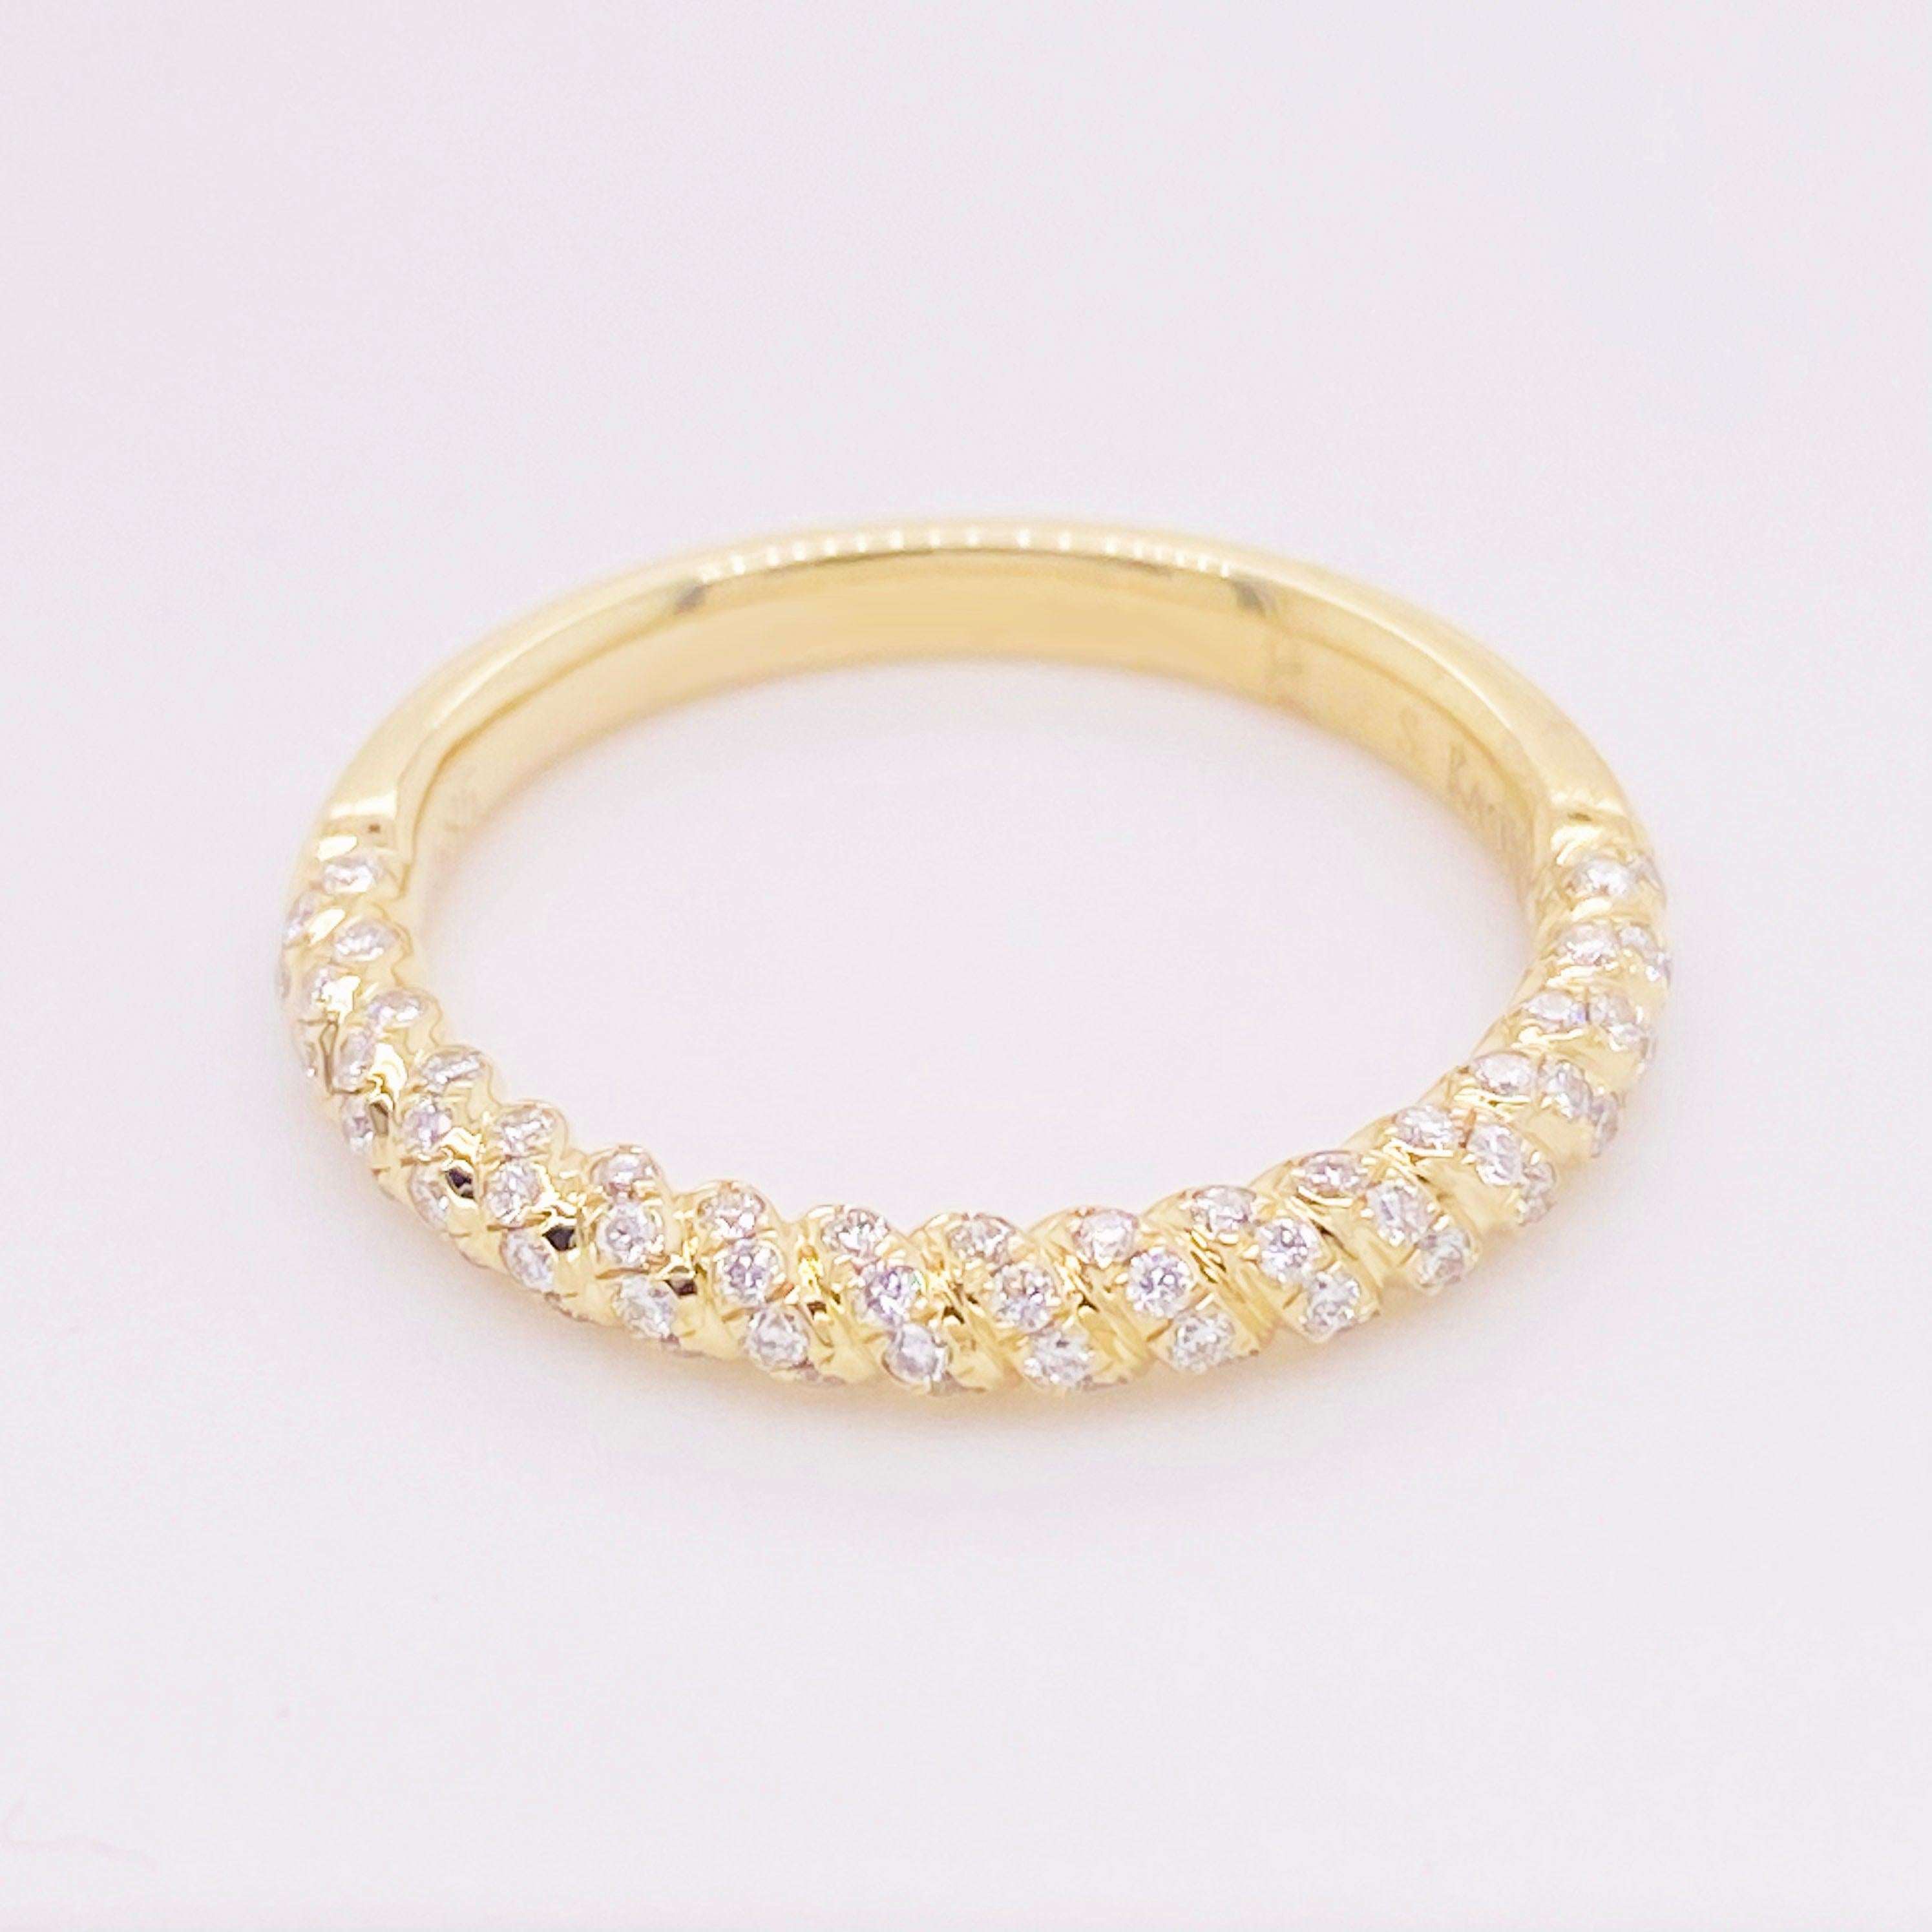 Im Angebot: Verdrehter Diamantring, 14 Karat Gold, Verlobungsring, Verdrehter Ring, stapelbar () 3